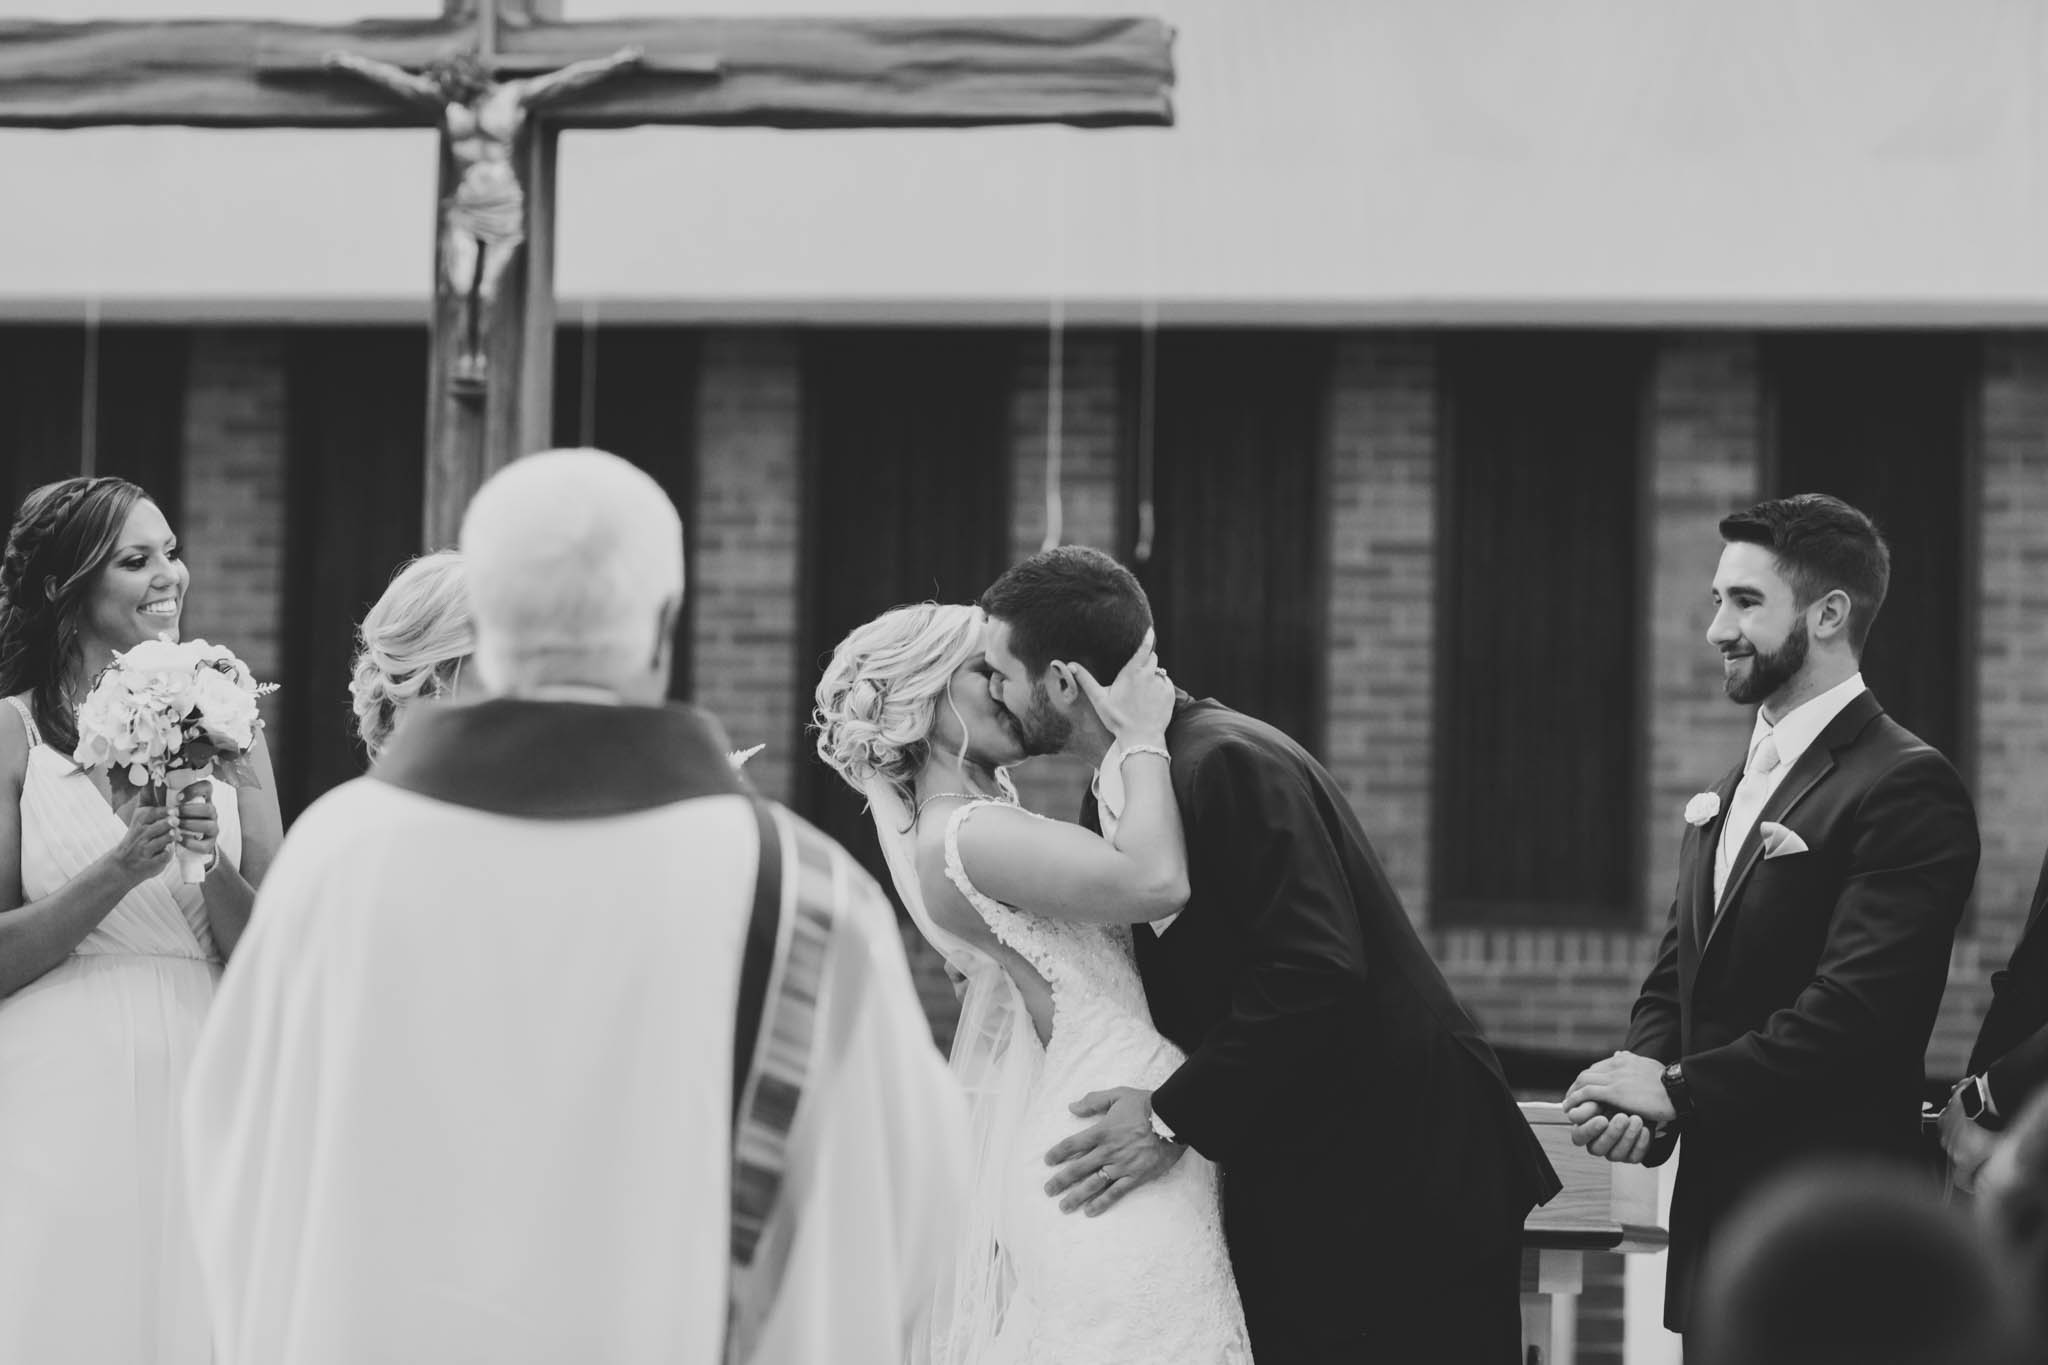 Jillian VanZytveld Photography - Grand Rapids Lifestyle Wedding Photography - 074.jpg